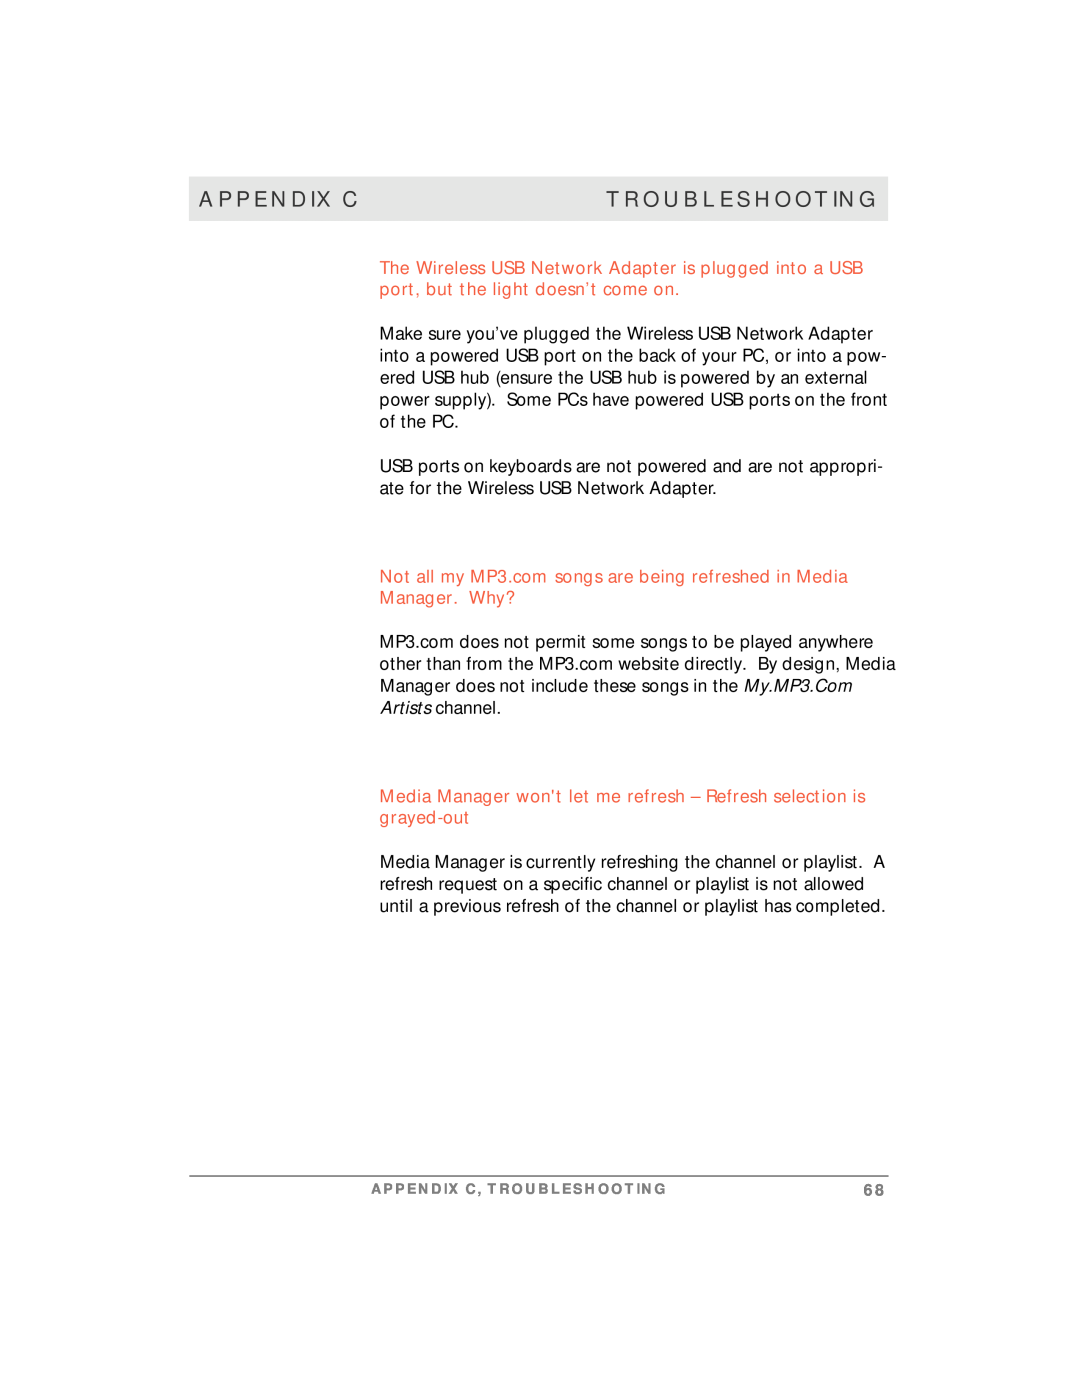 Motorola simplefi manual Manager. Why?, Appendix C, Troubleshooting 